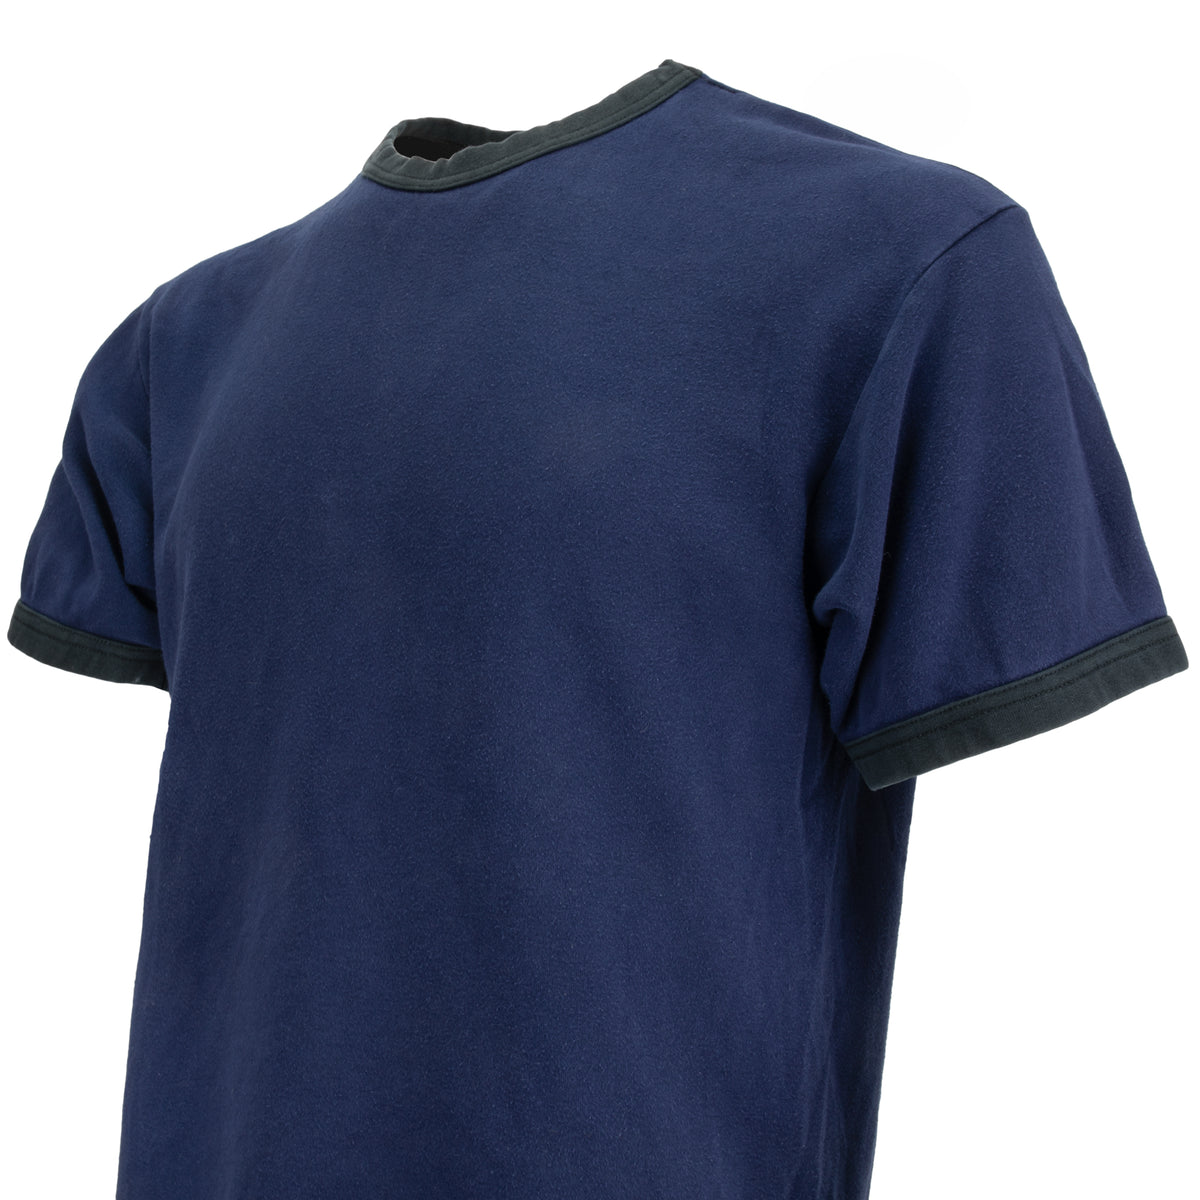 Dutch Army T-Shirt | Navy Blue